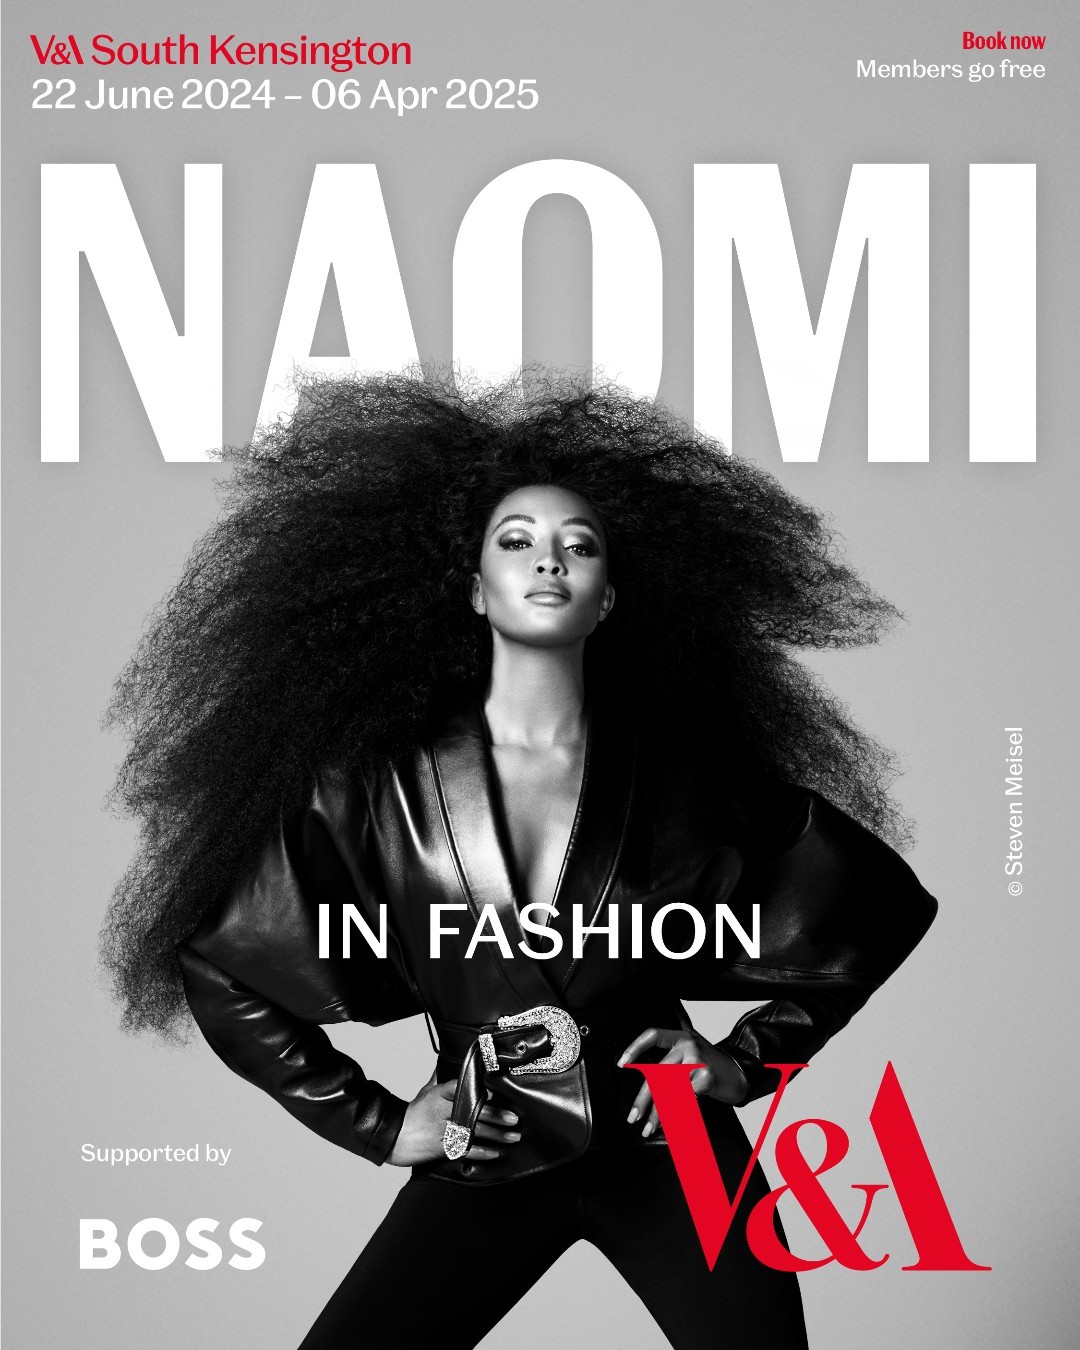 Naomi Campbell: Η νέα έκθεση του V&Α Museum είναι αφιερωμένη σε εκείνη